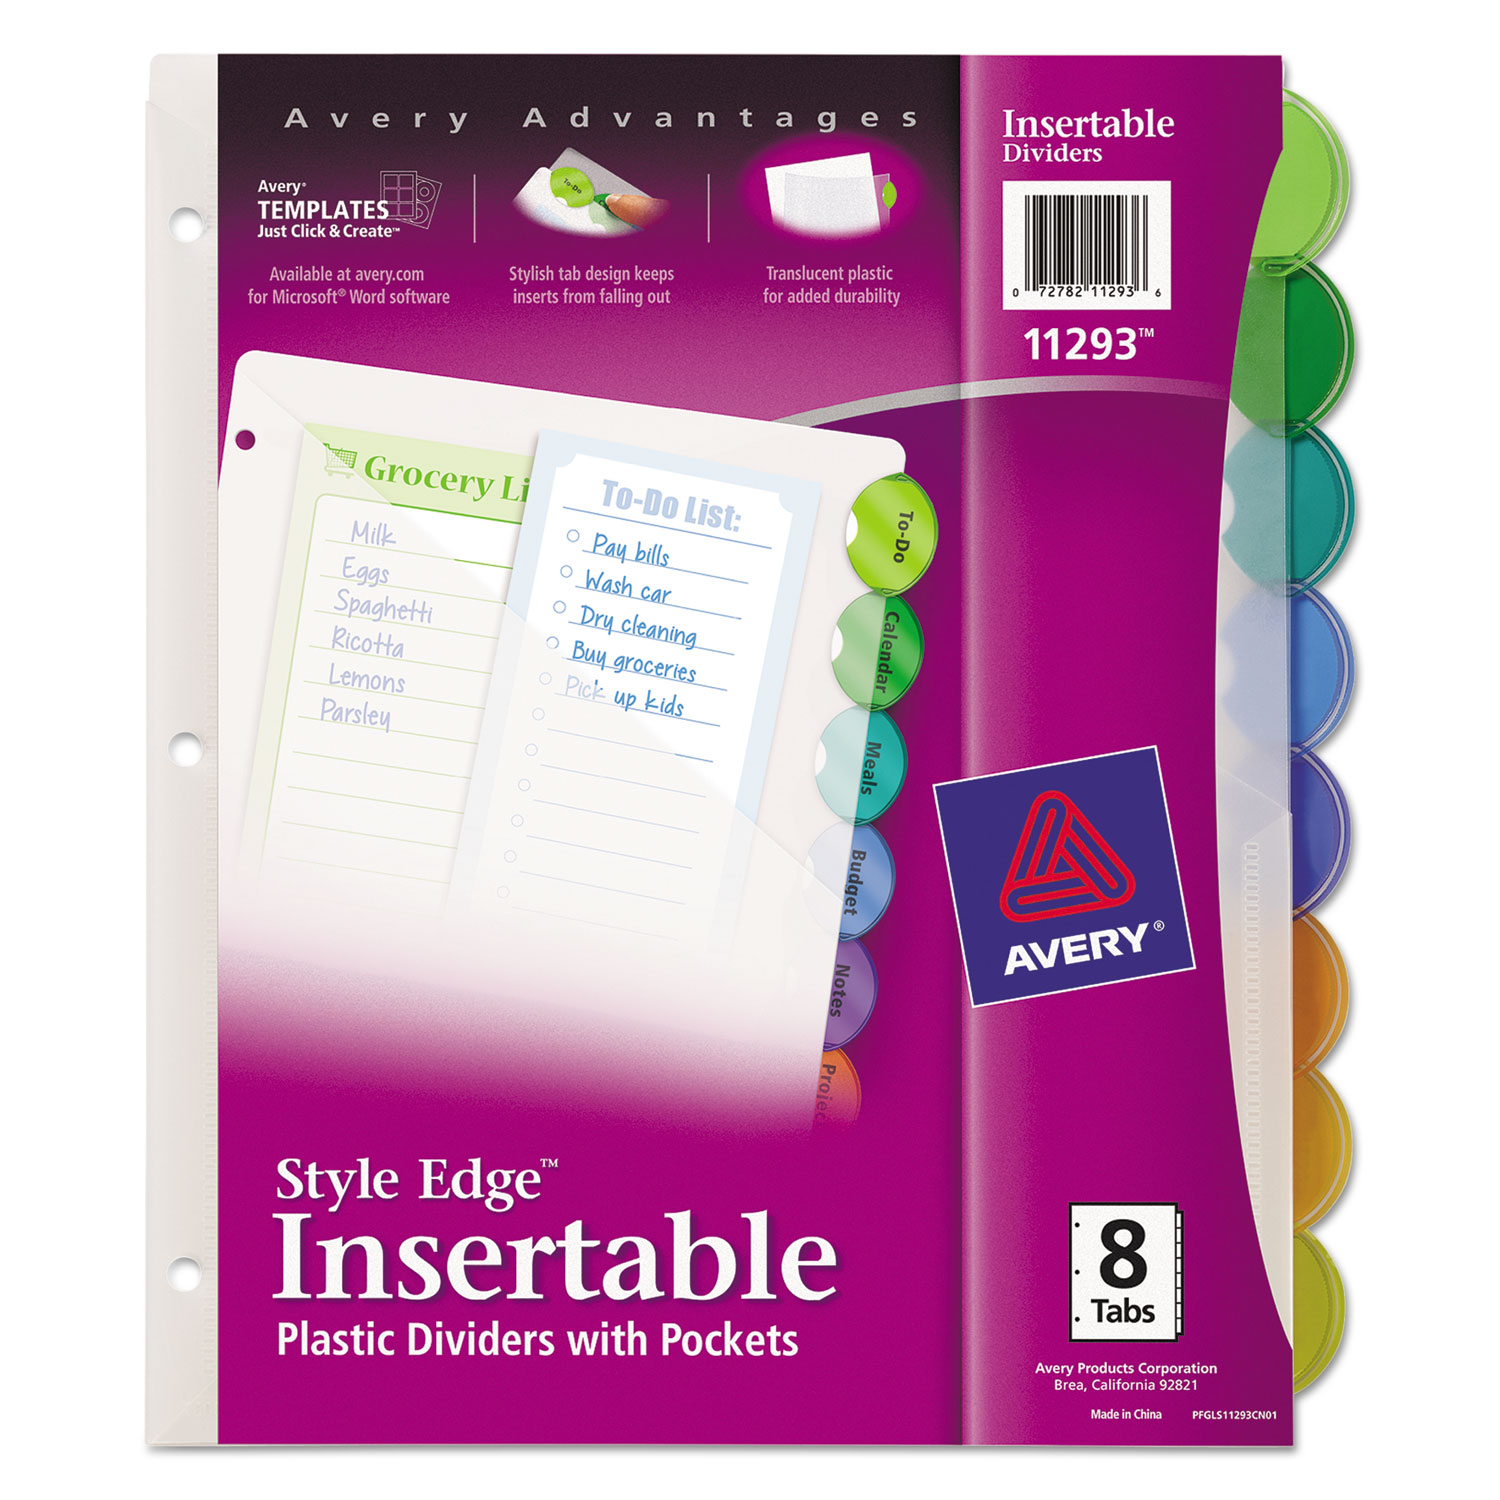  Avery 11293 Insertable Style Edge Tab Plastic 1-Pocket Dividers, 8-Tab, 11.25 x 9.25, Translucent, 1 Set (AVE11293) 